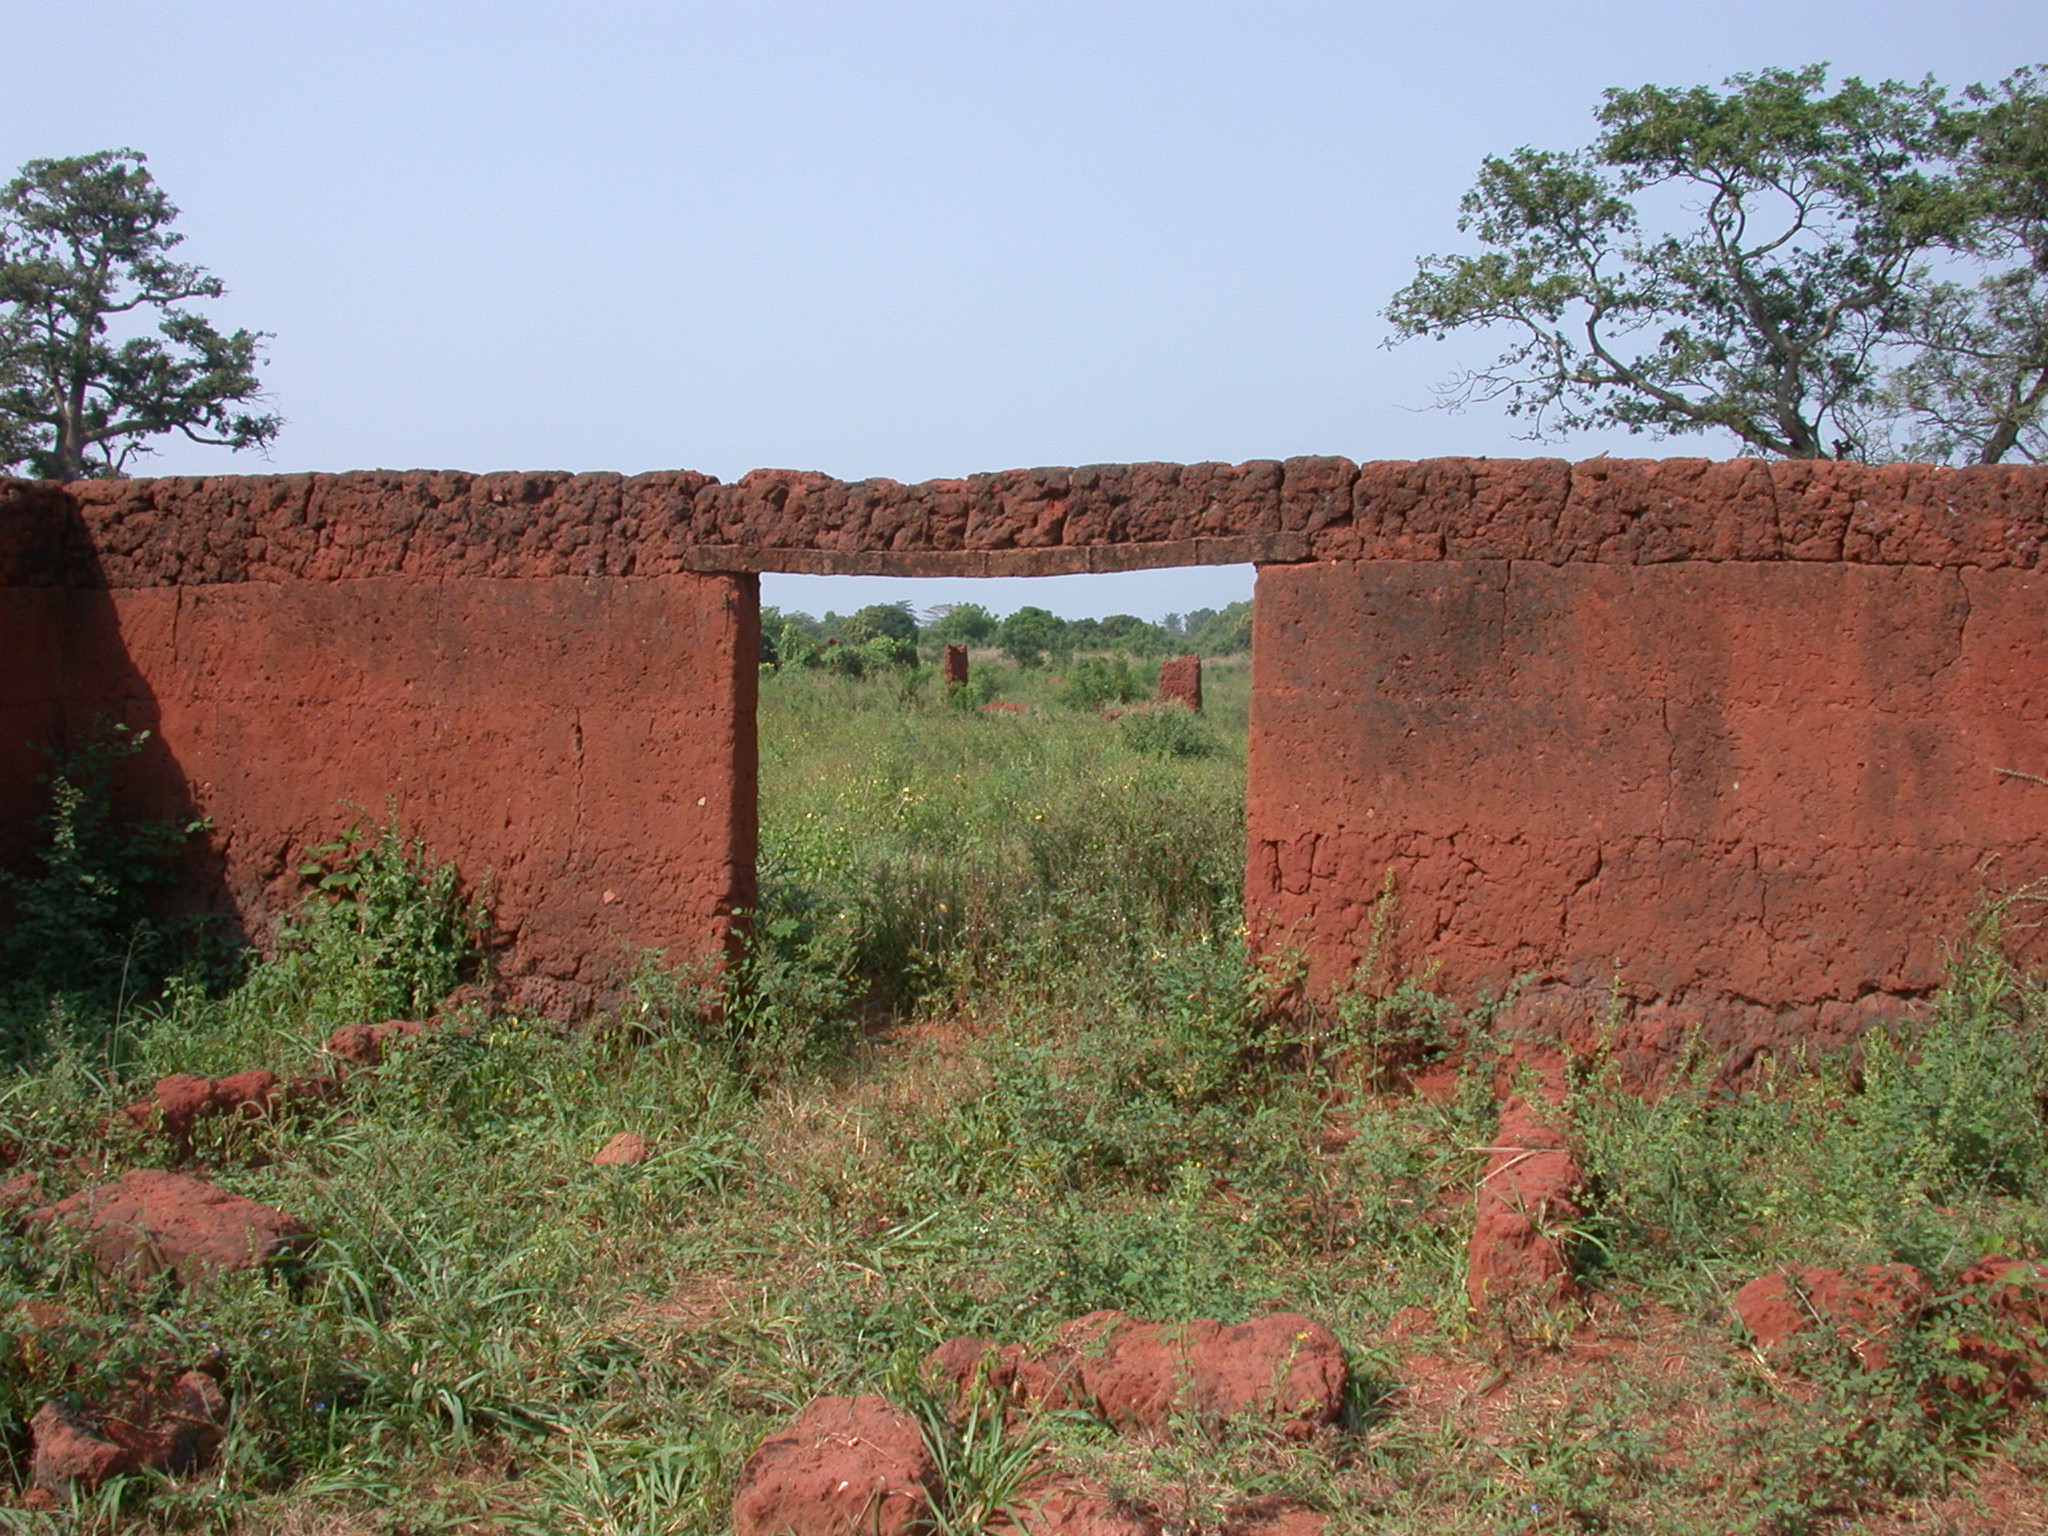 Ruins of Palace of King Agadja, Abomey, Benin